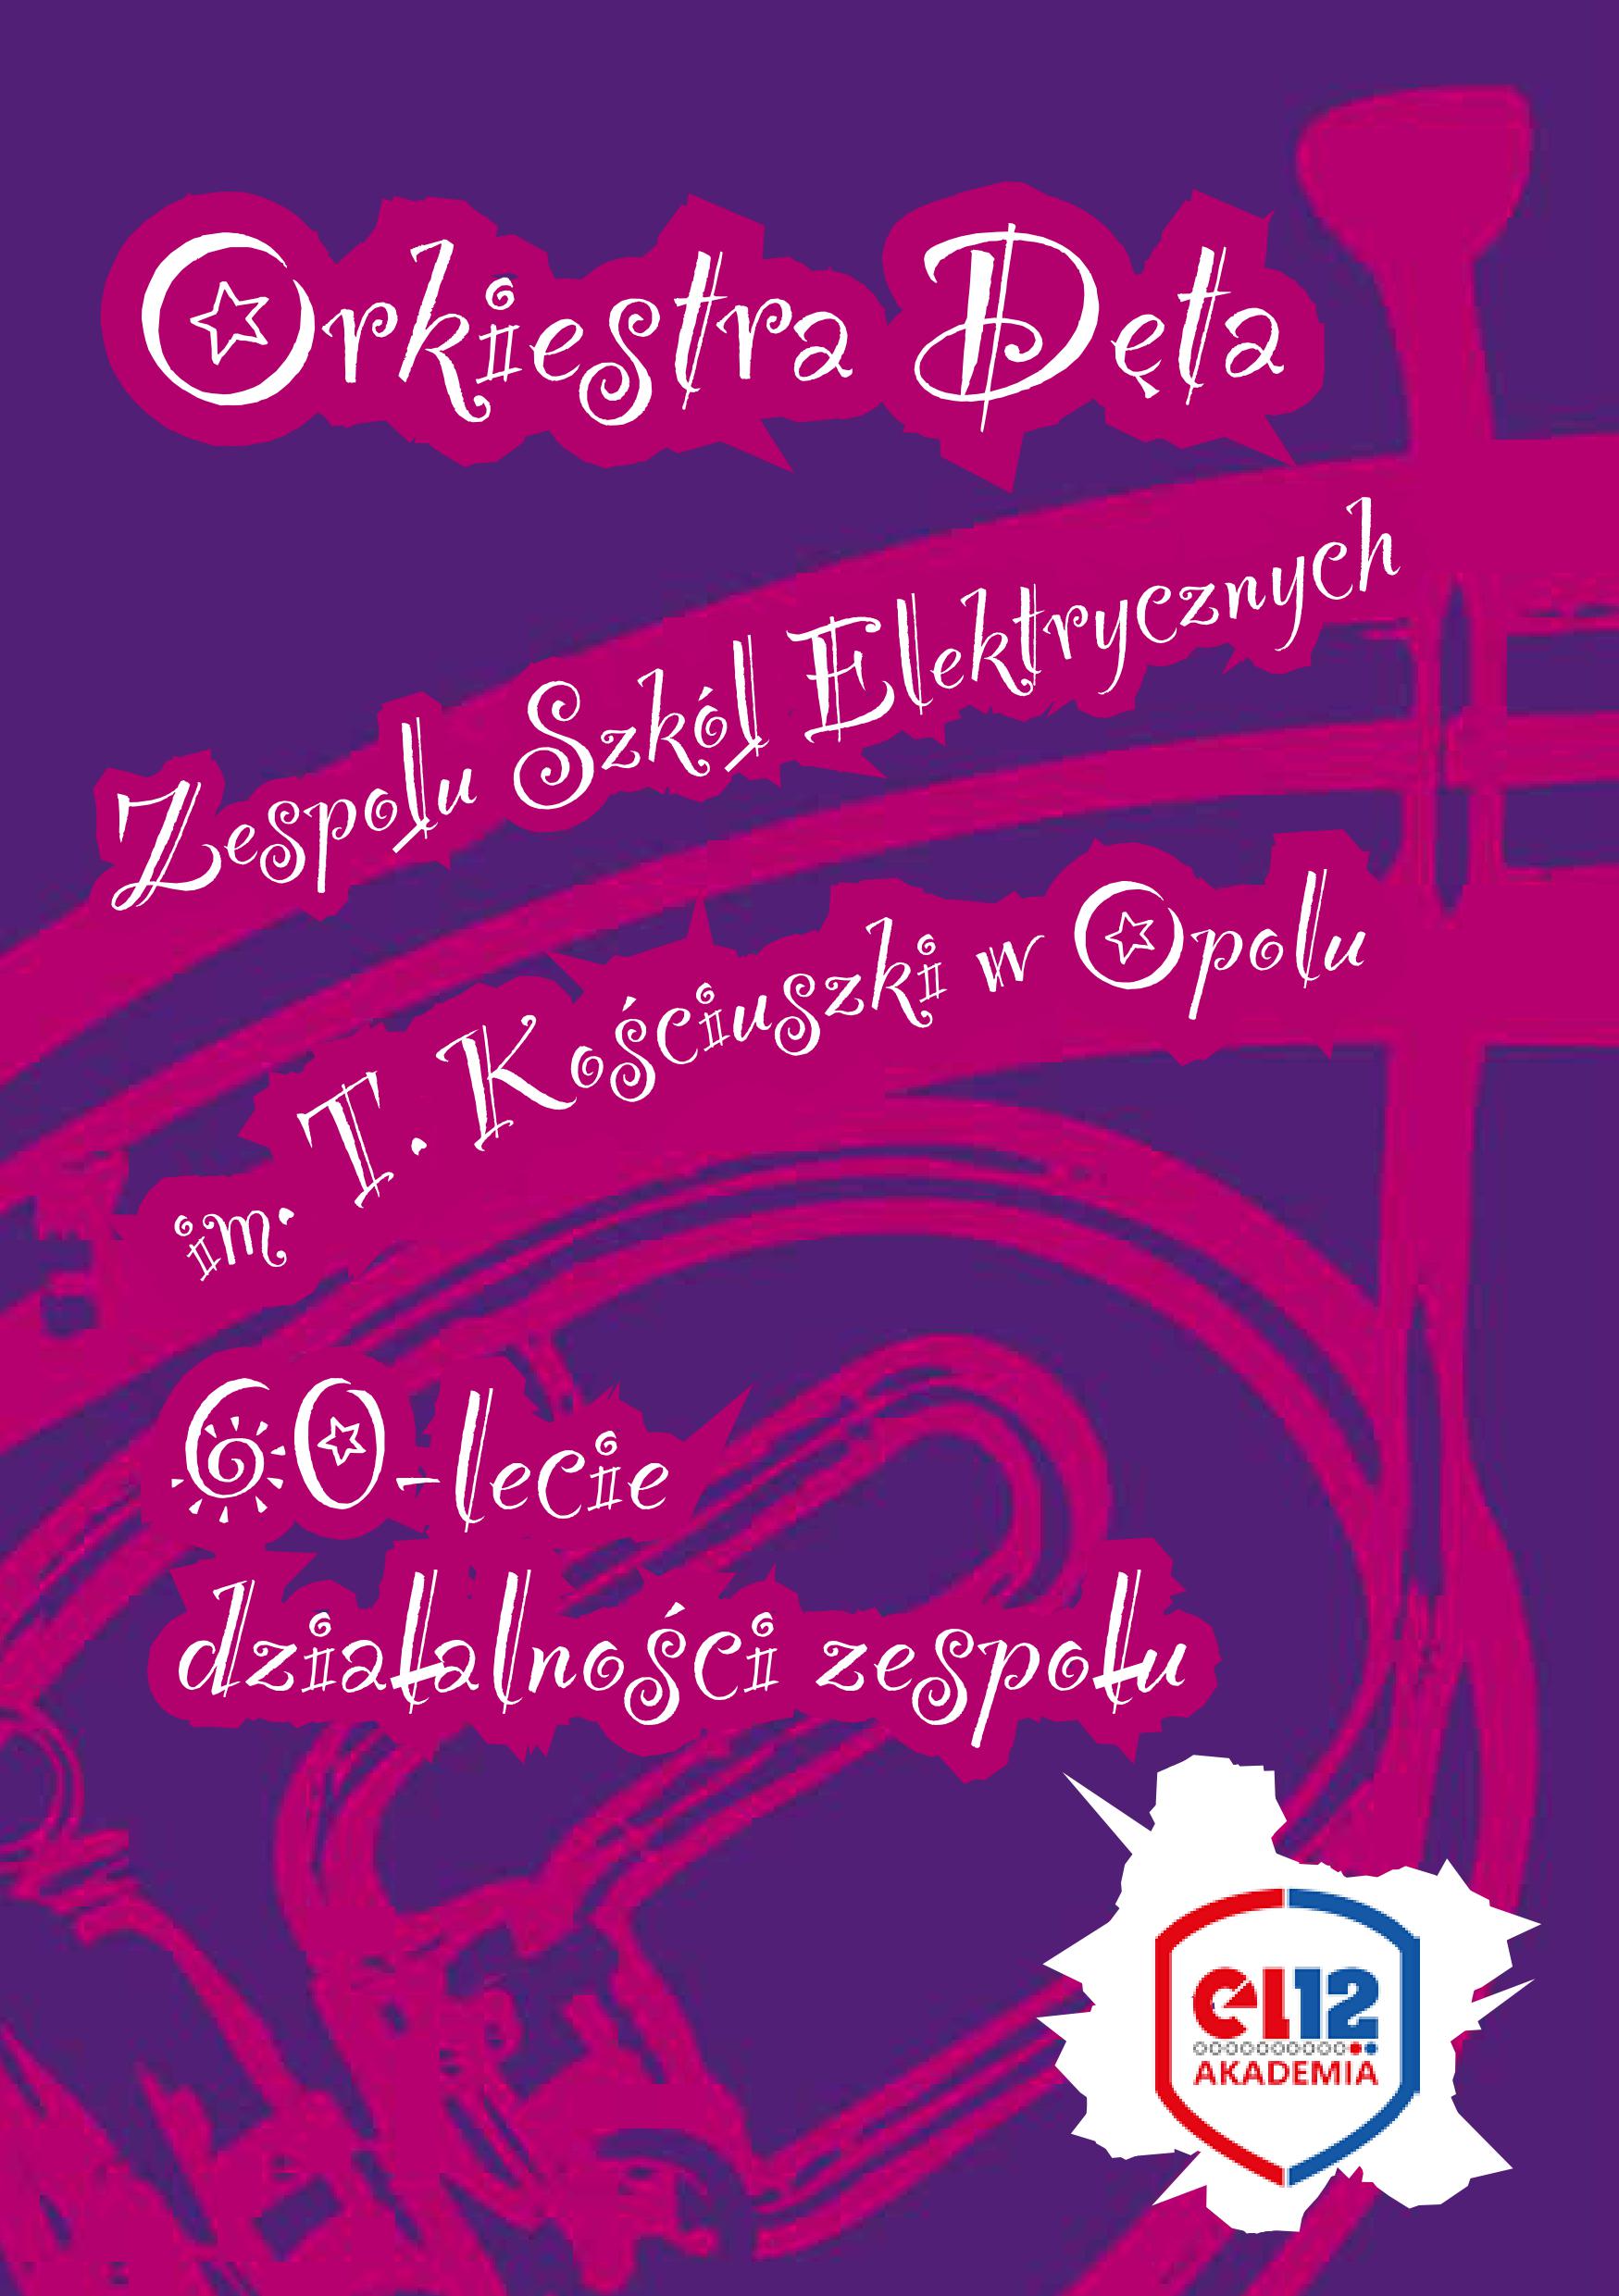 folder Orkiestra Dęta ZSE w Opolu